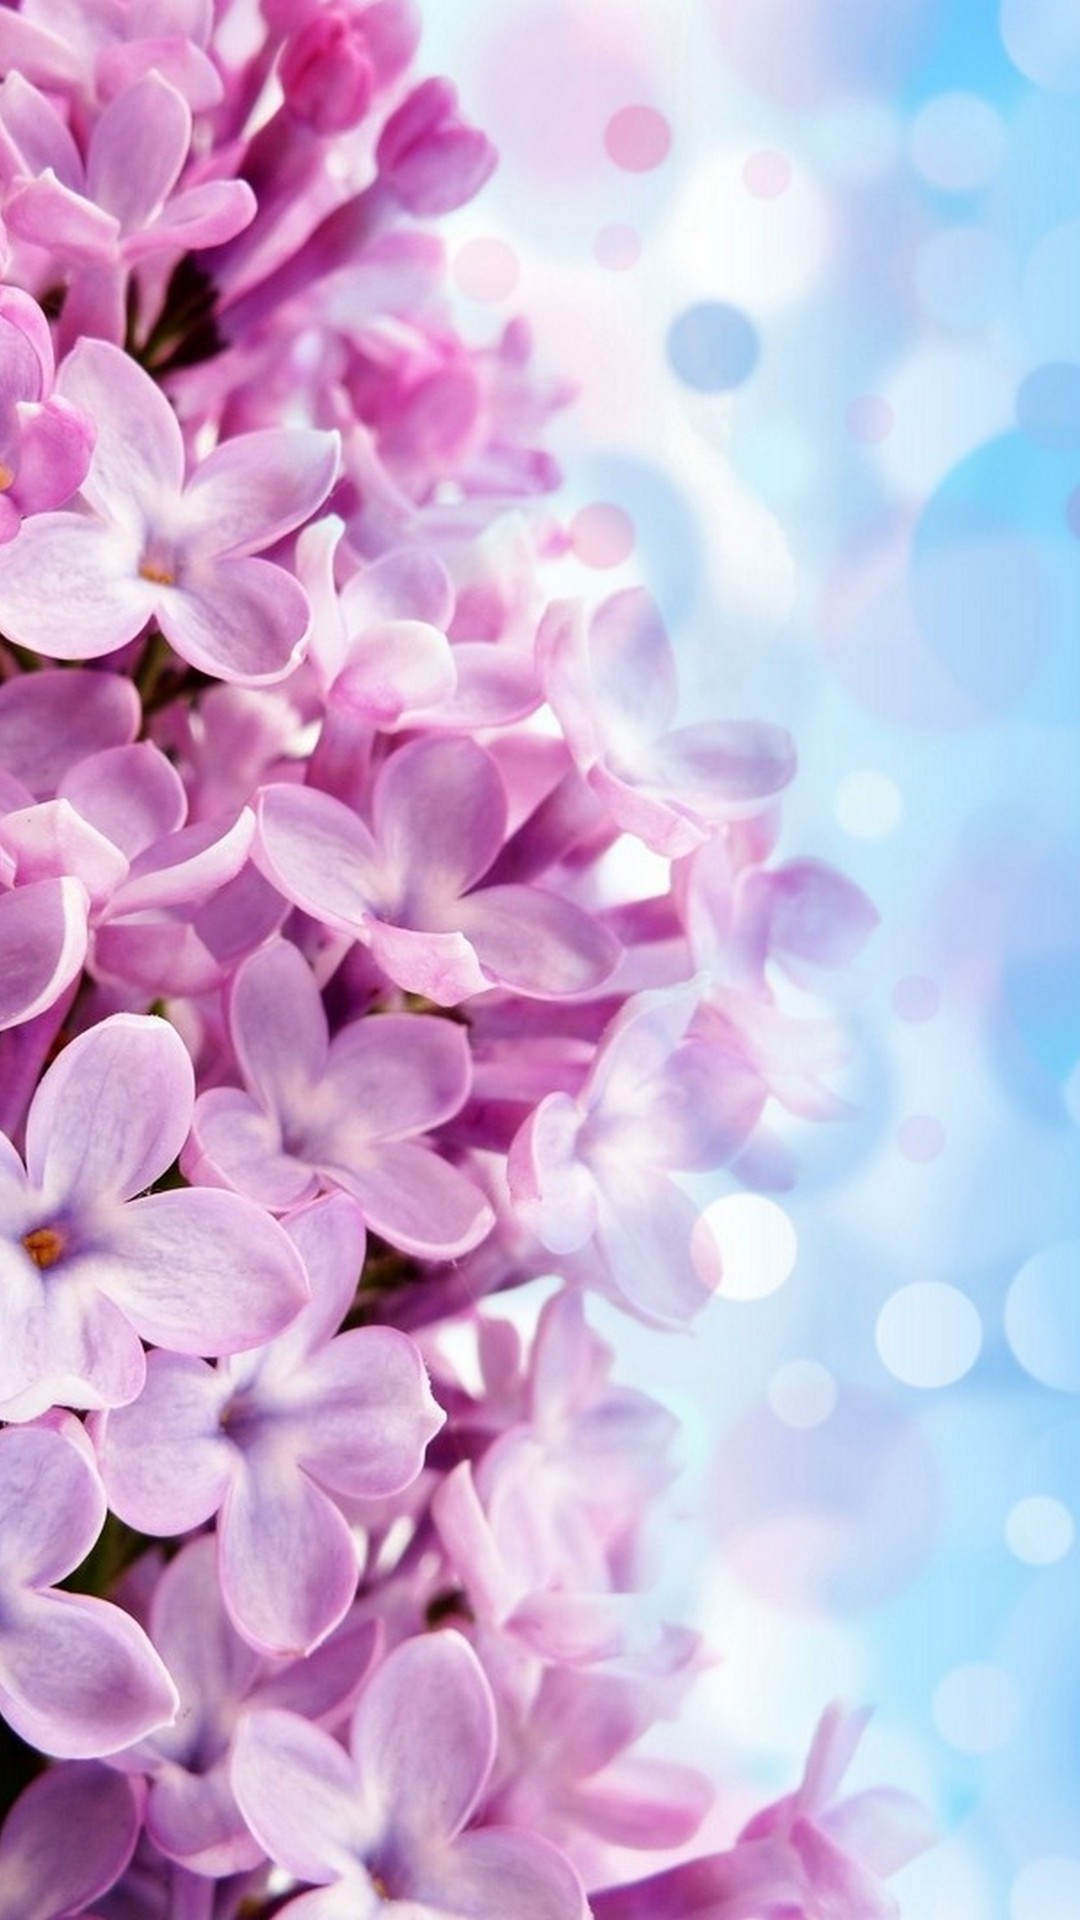 iPhone Wallpaper HD Purple Flowers | 2020 Cute Wallpapers